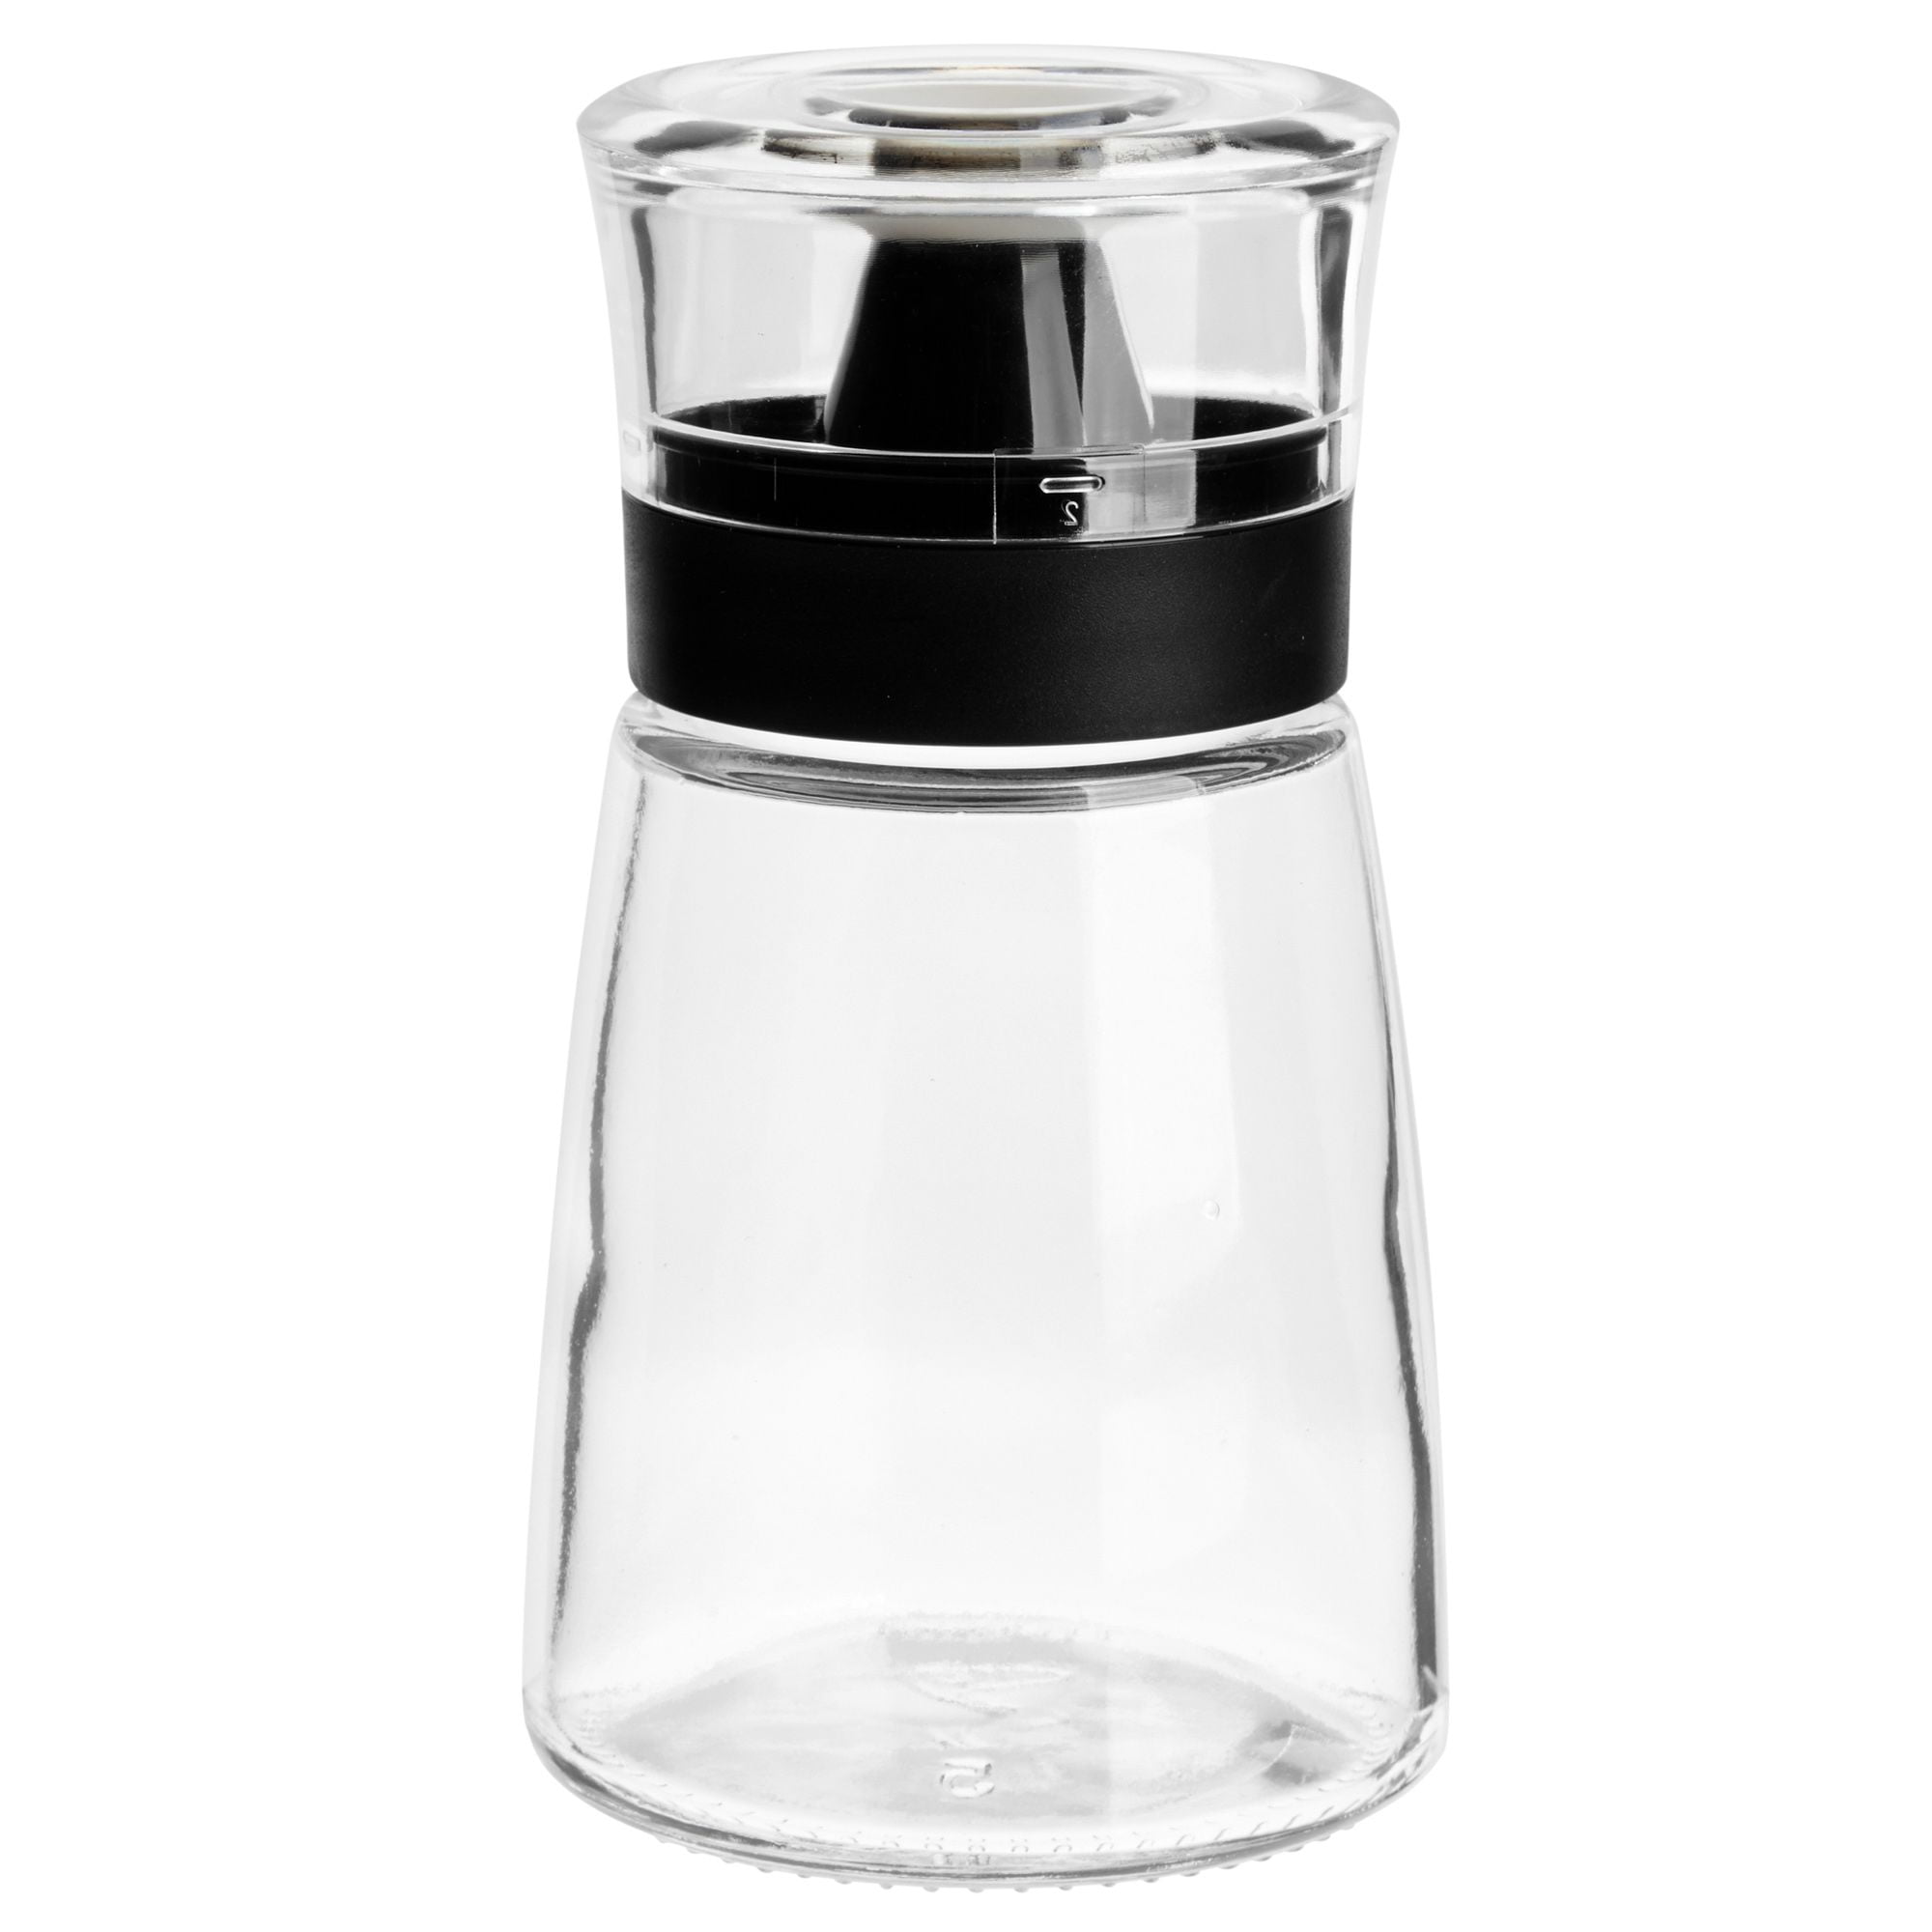 5Five Simply Smart vinegar and oil set with 2 dispenser bottles